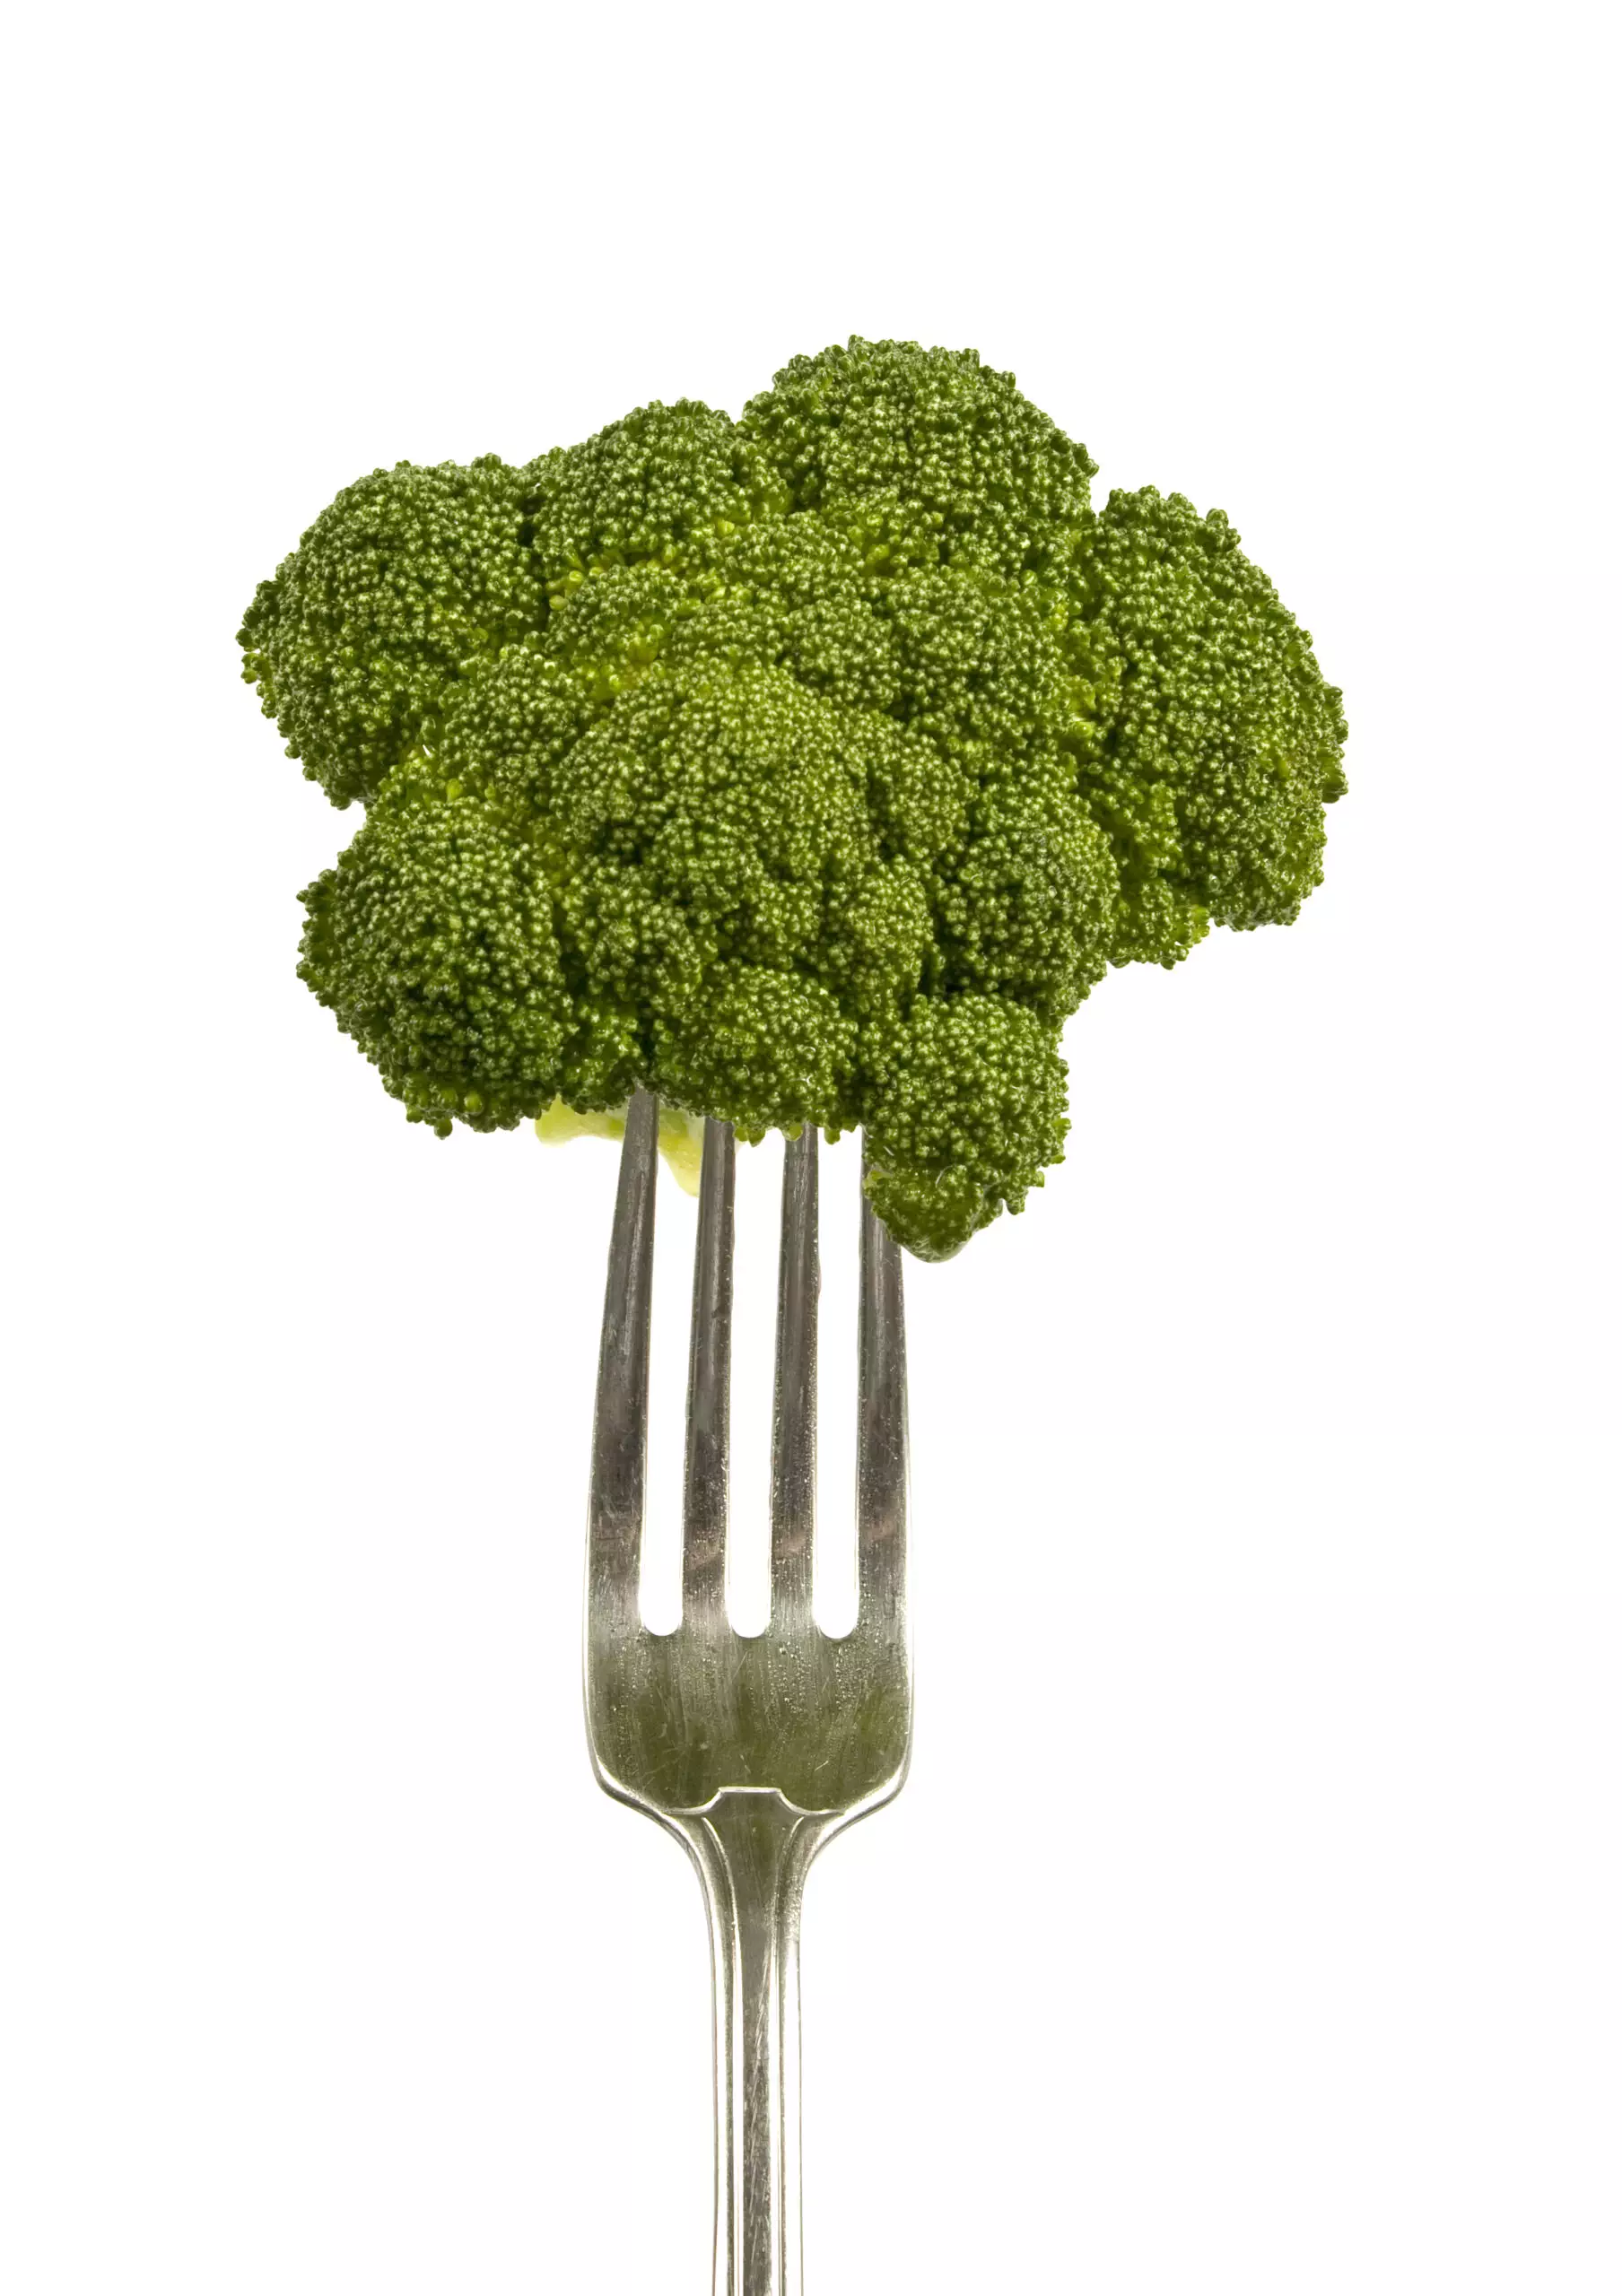 Broccoli floret on fork against white background.